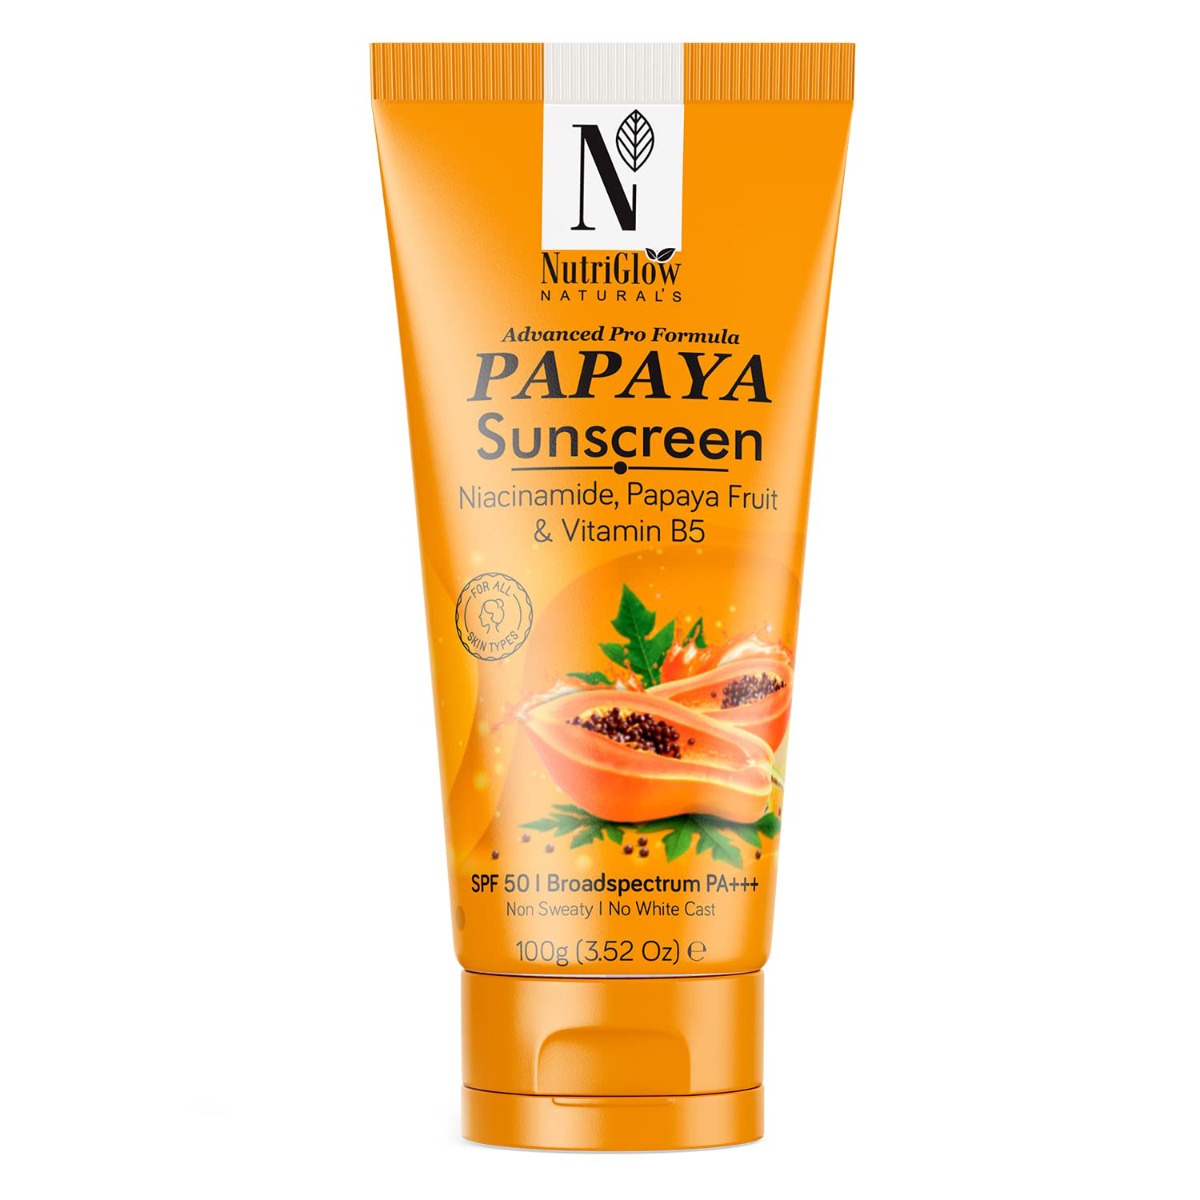 NutriGlow Natural's Advanced Pro Formula Papaya Sunscreen No White Cast, All Skin Type - SPF 50 PA+++, 100gm